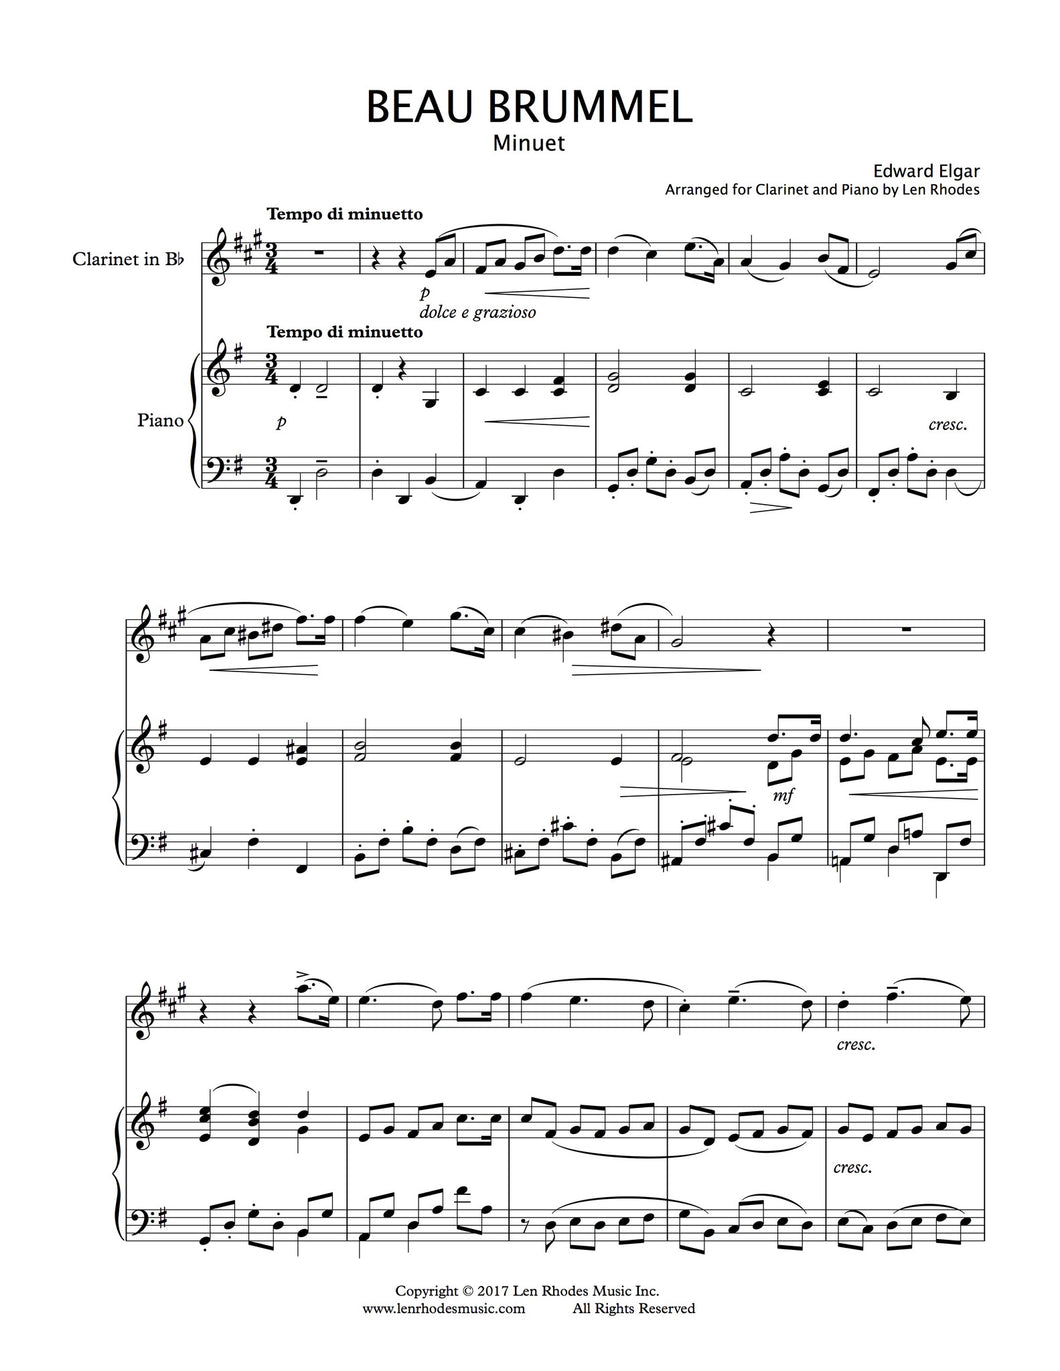 Minuet from 'Beau Brummel', Elgar - Clarinet and Piano